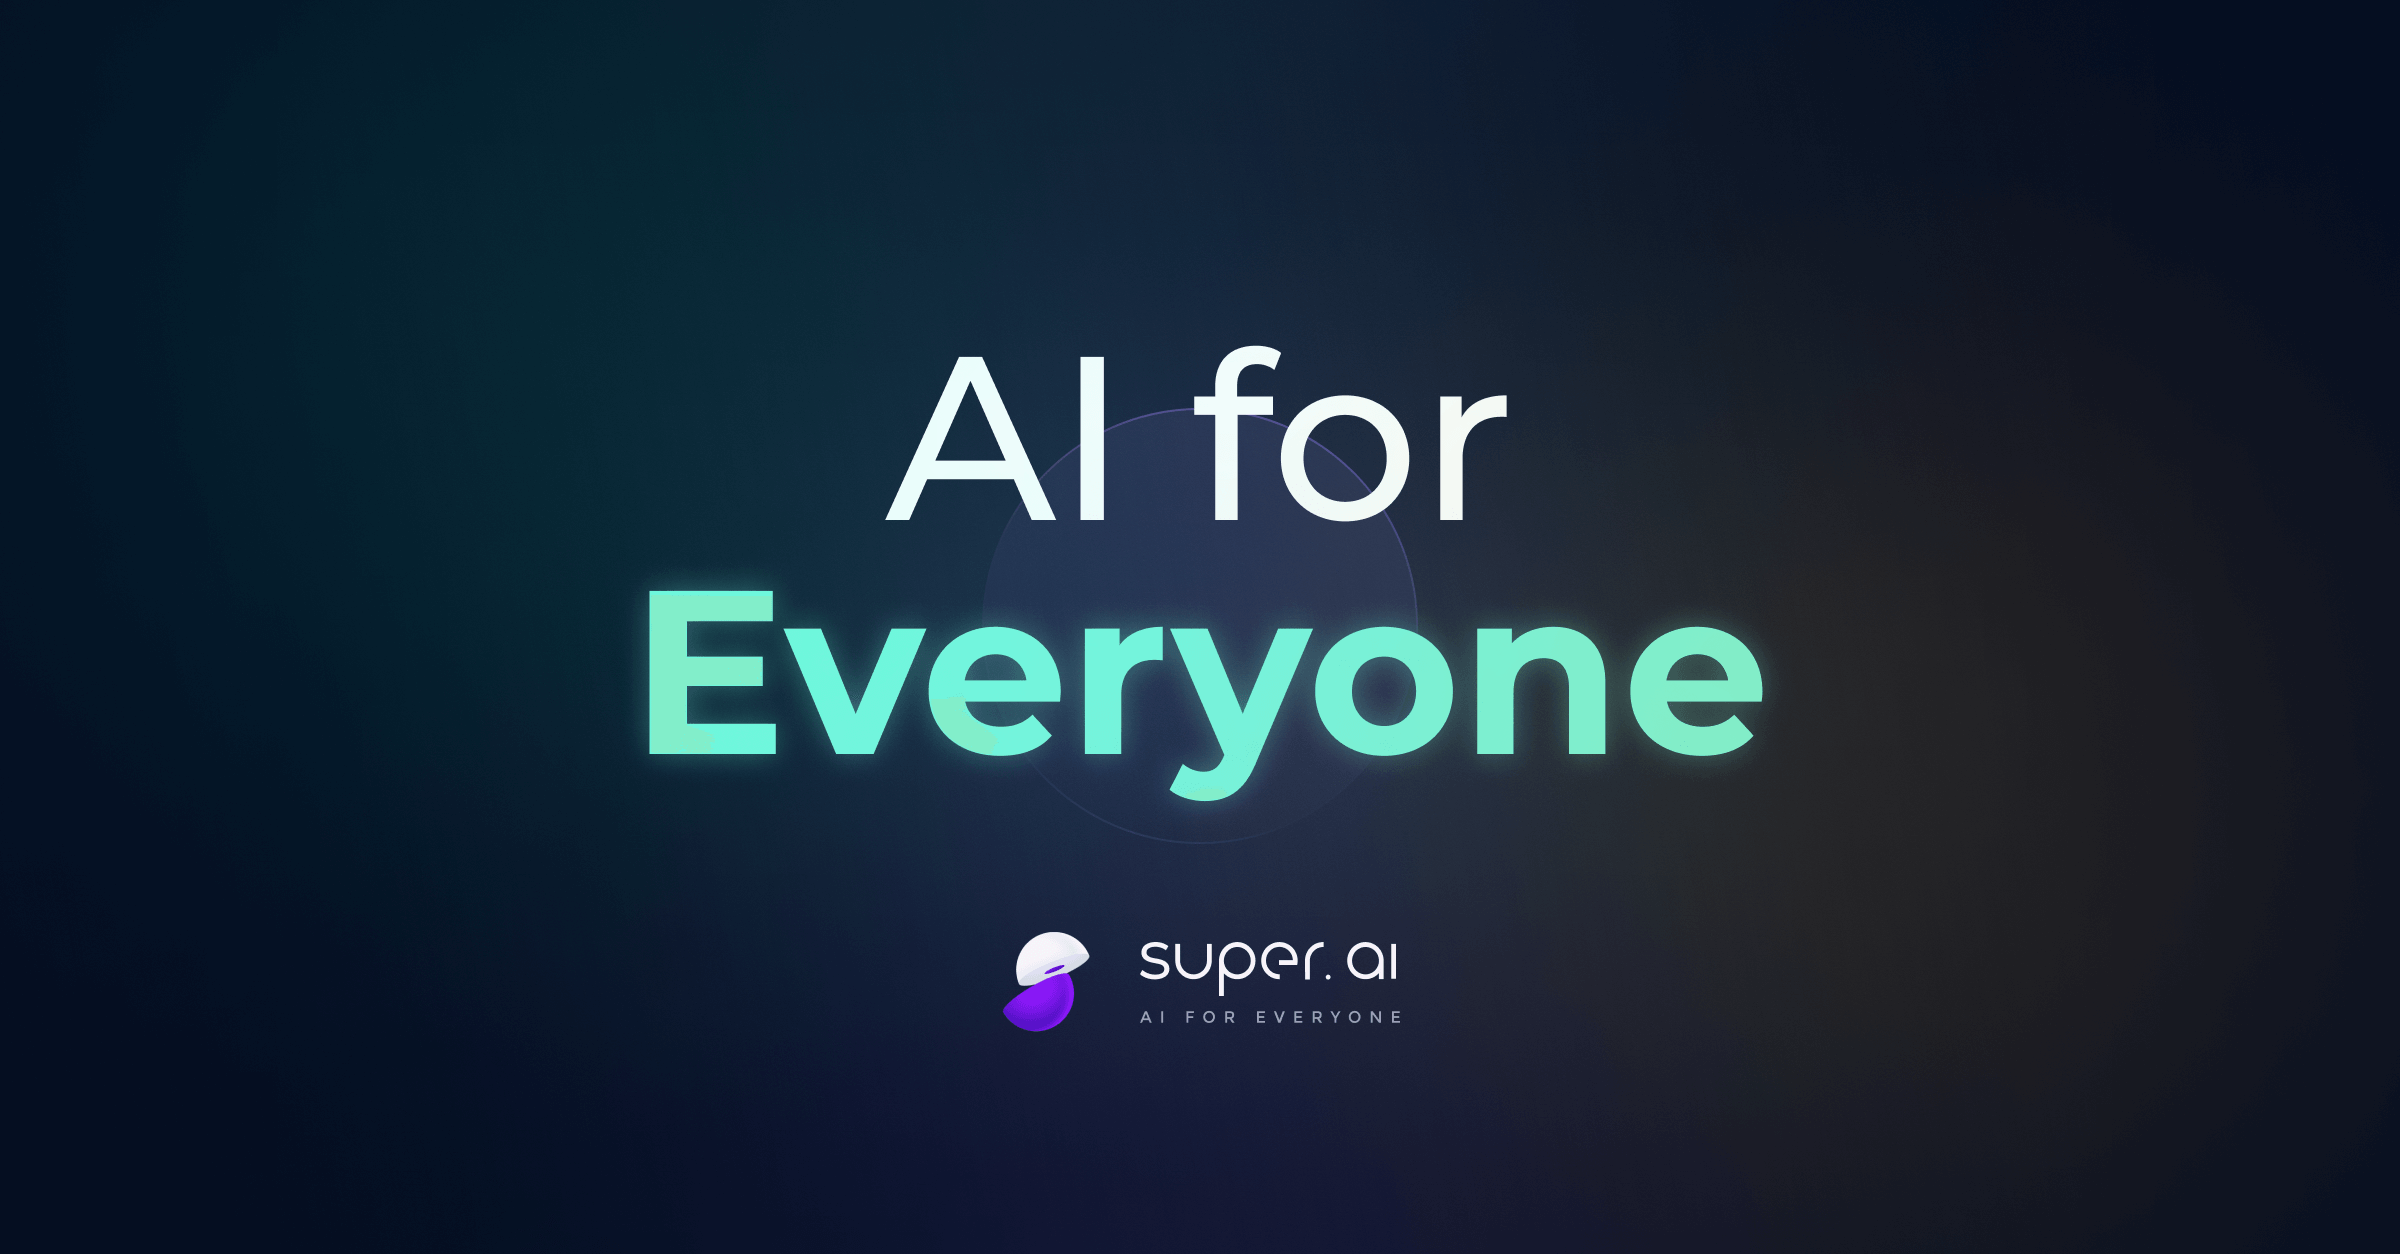 Super.AI - A platform to process documents